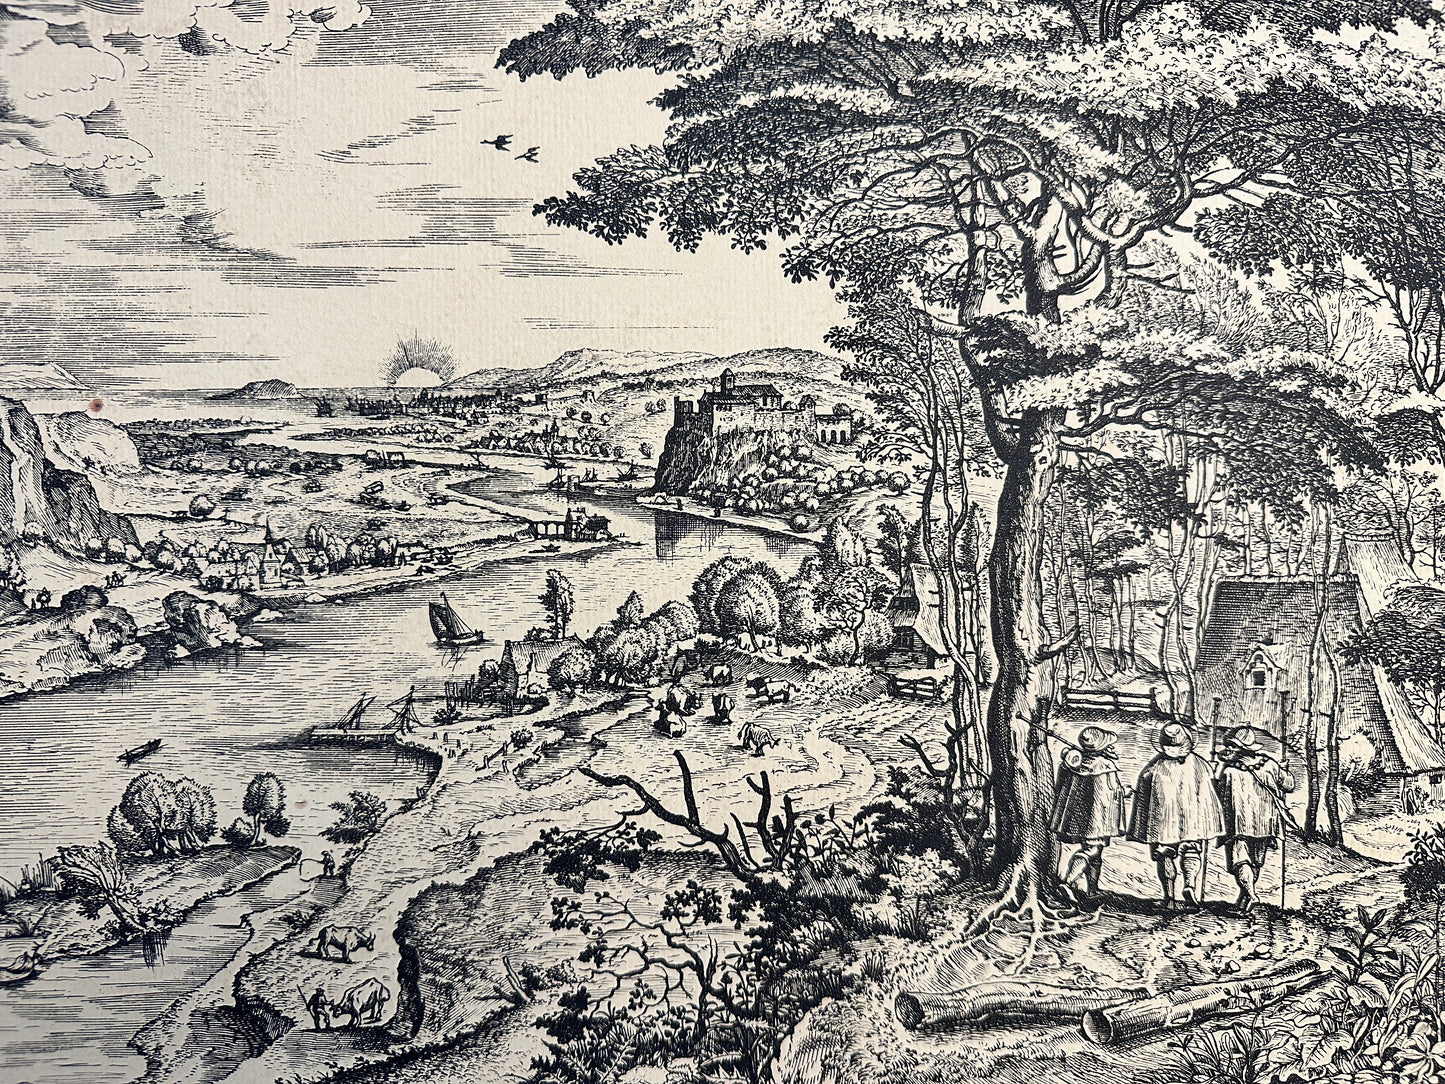 Pieter Bruegel the Elder Etching: "Landscape with Pilgrims at Emmaus" (Euntes in Emaus)